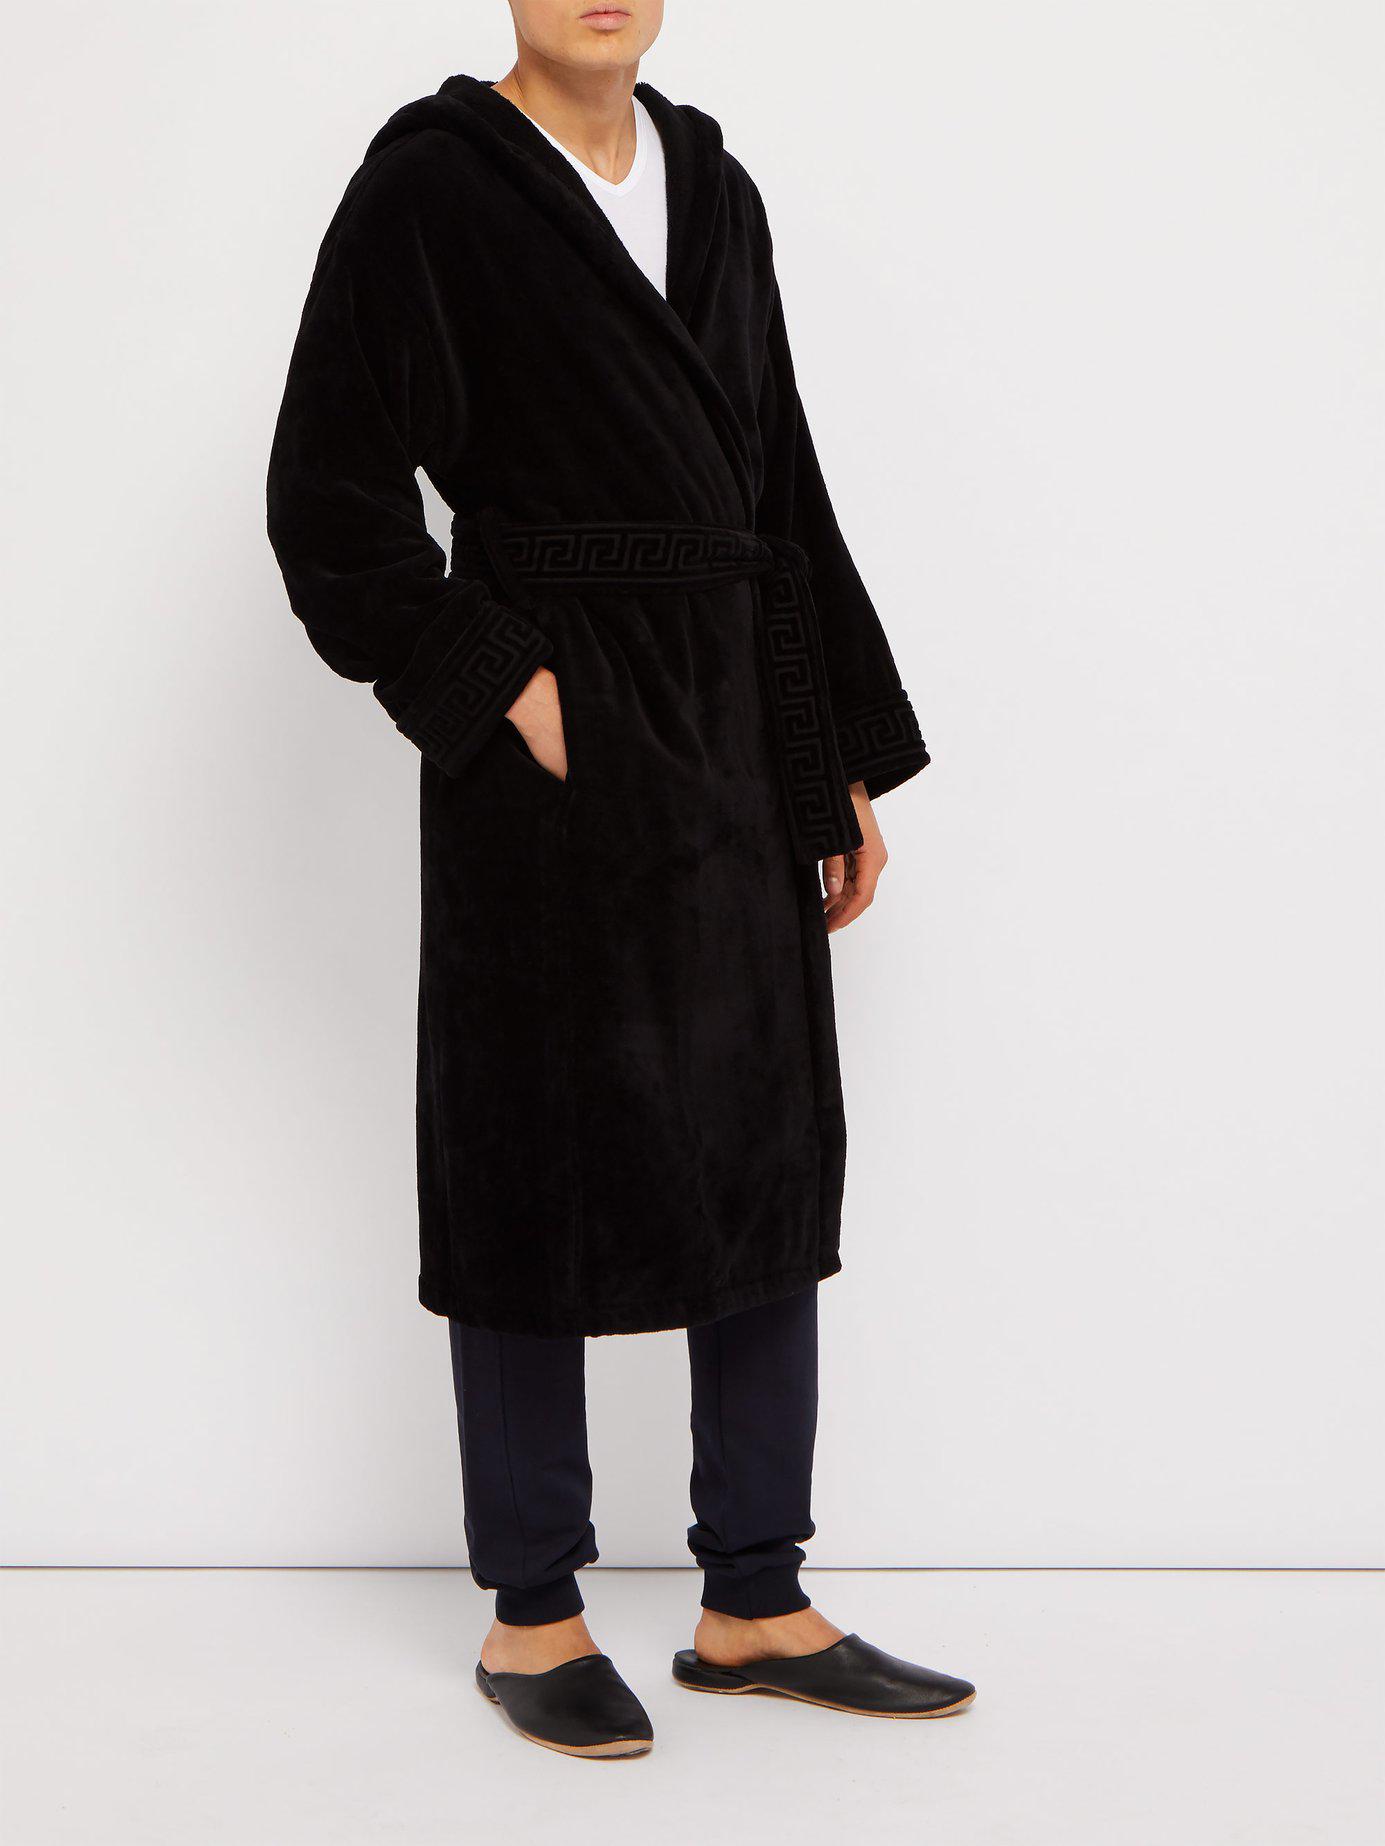 versace robe with hood